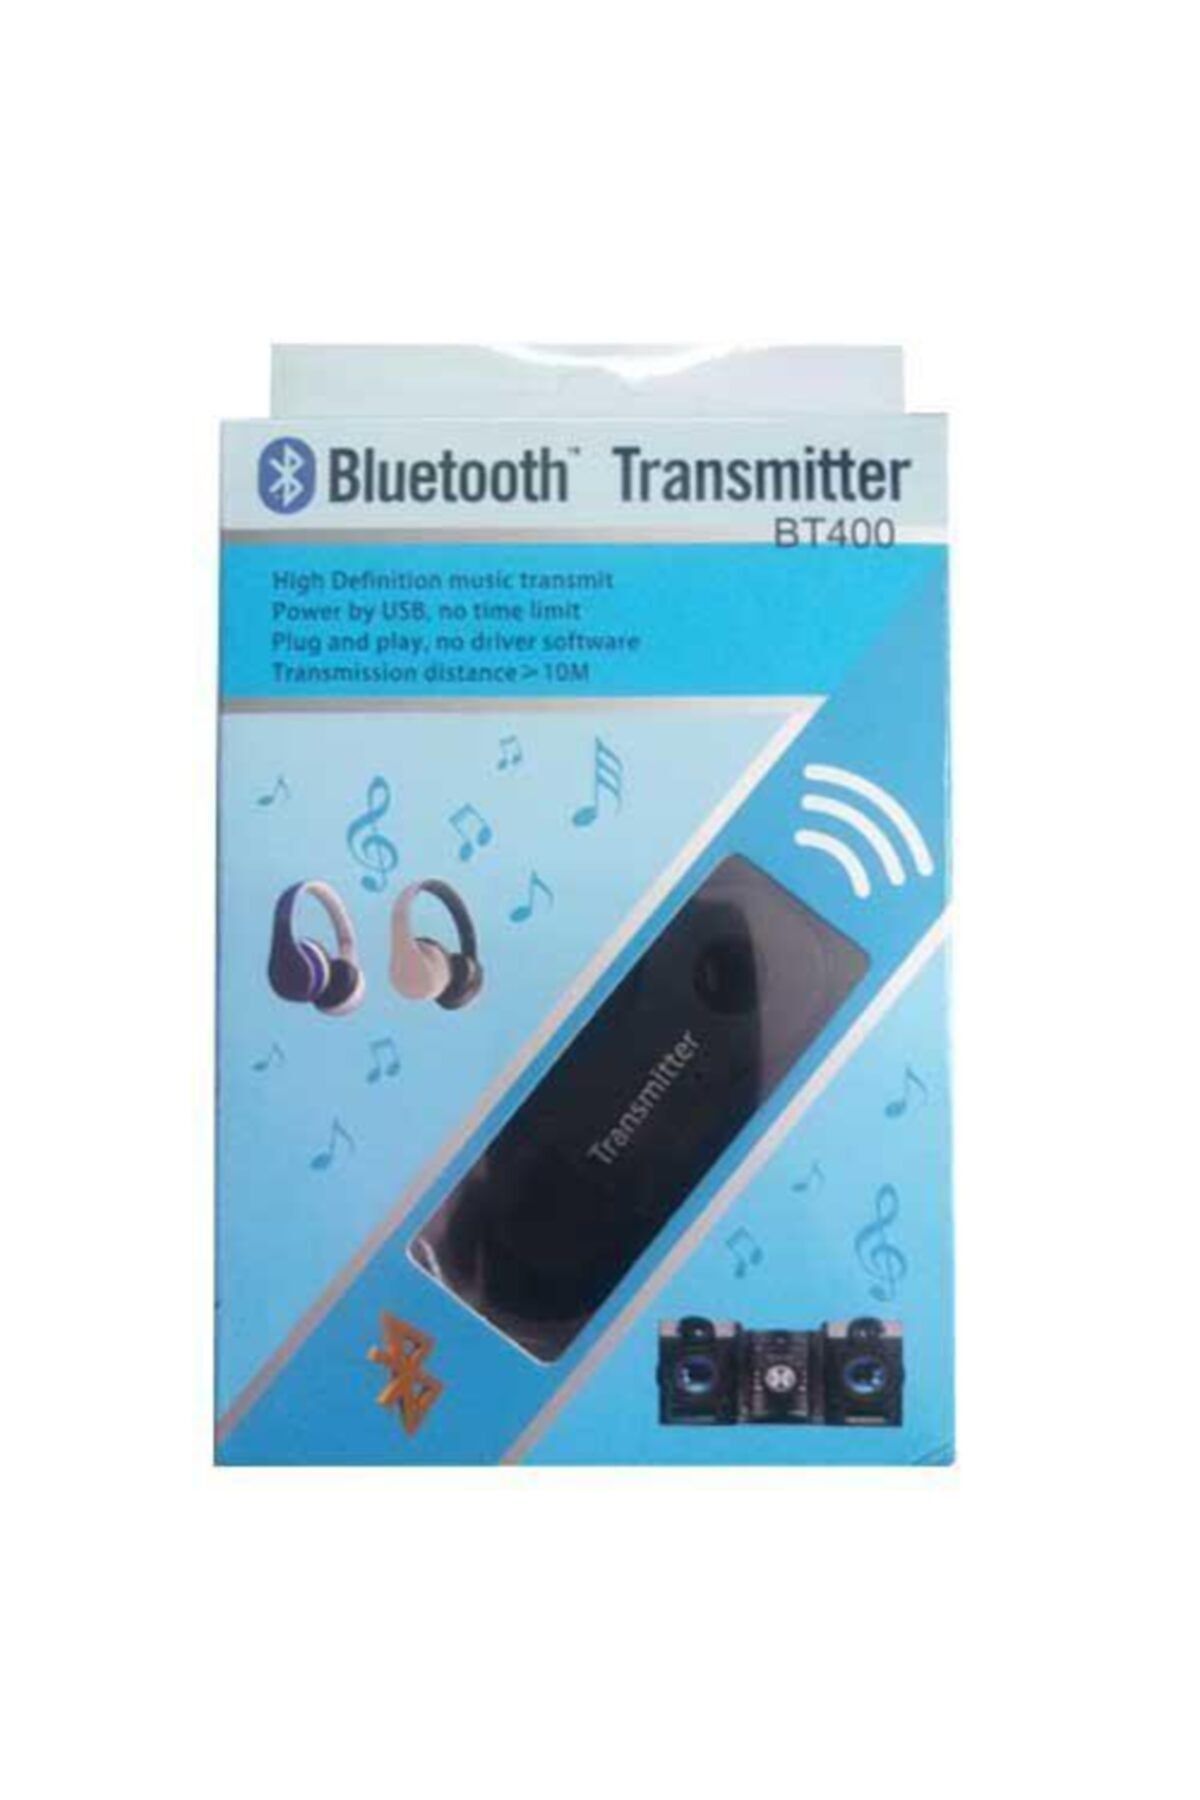 Platoon Kablosuz Bluetooth Transmitter Bt400 Bluetooth Verici Televizyon İçin Bluetooth Cihazı